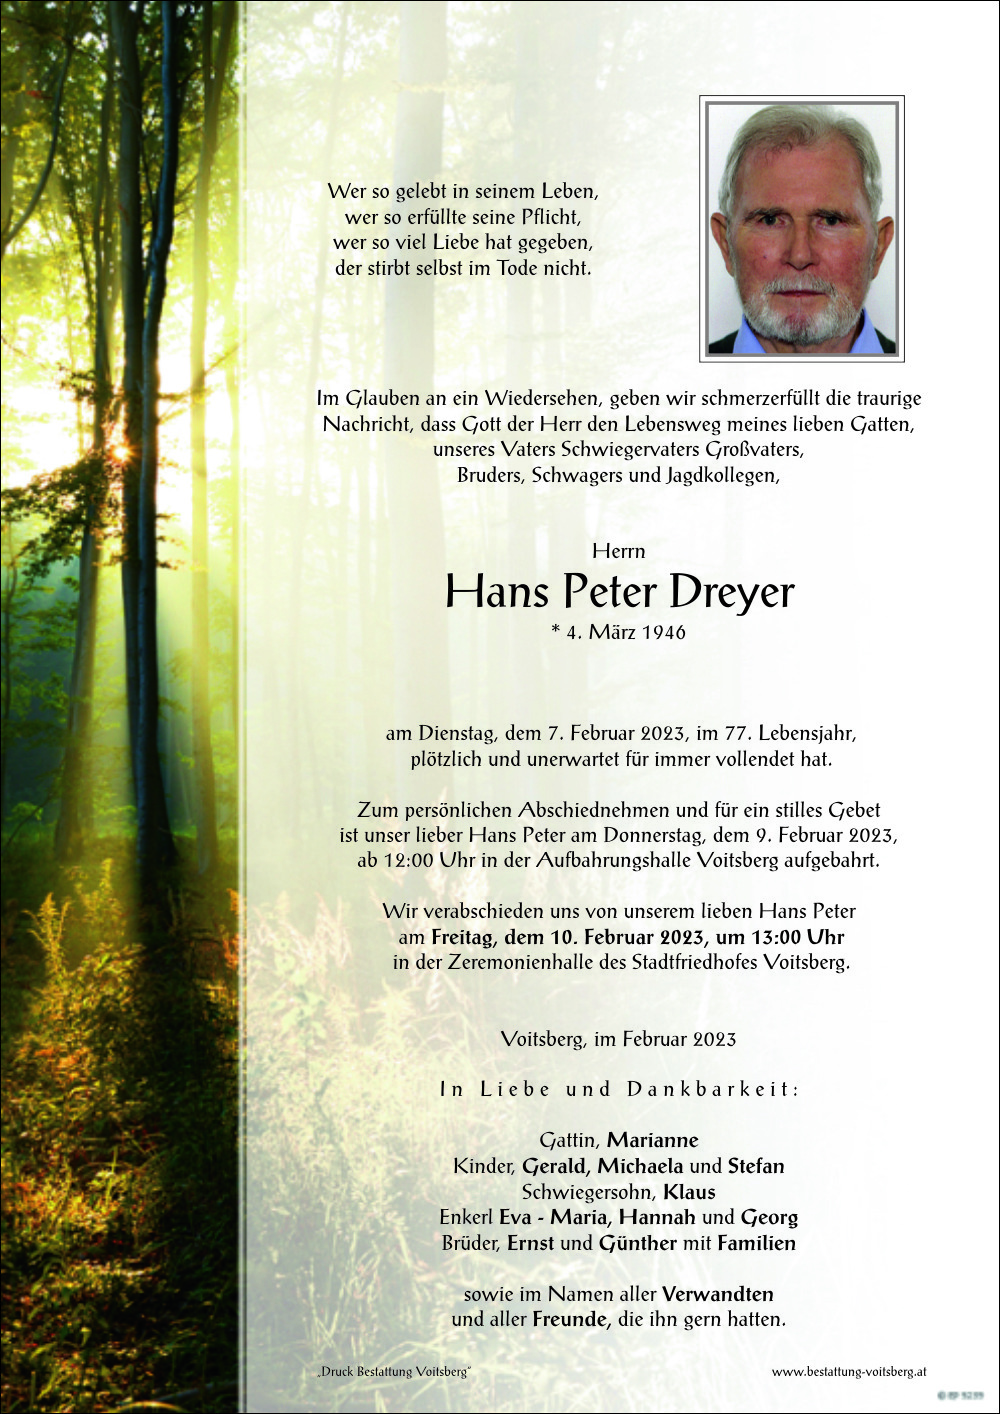 Hans Peter Dreyer